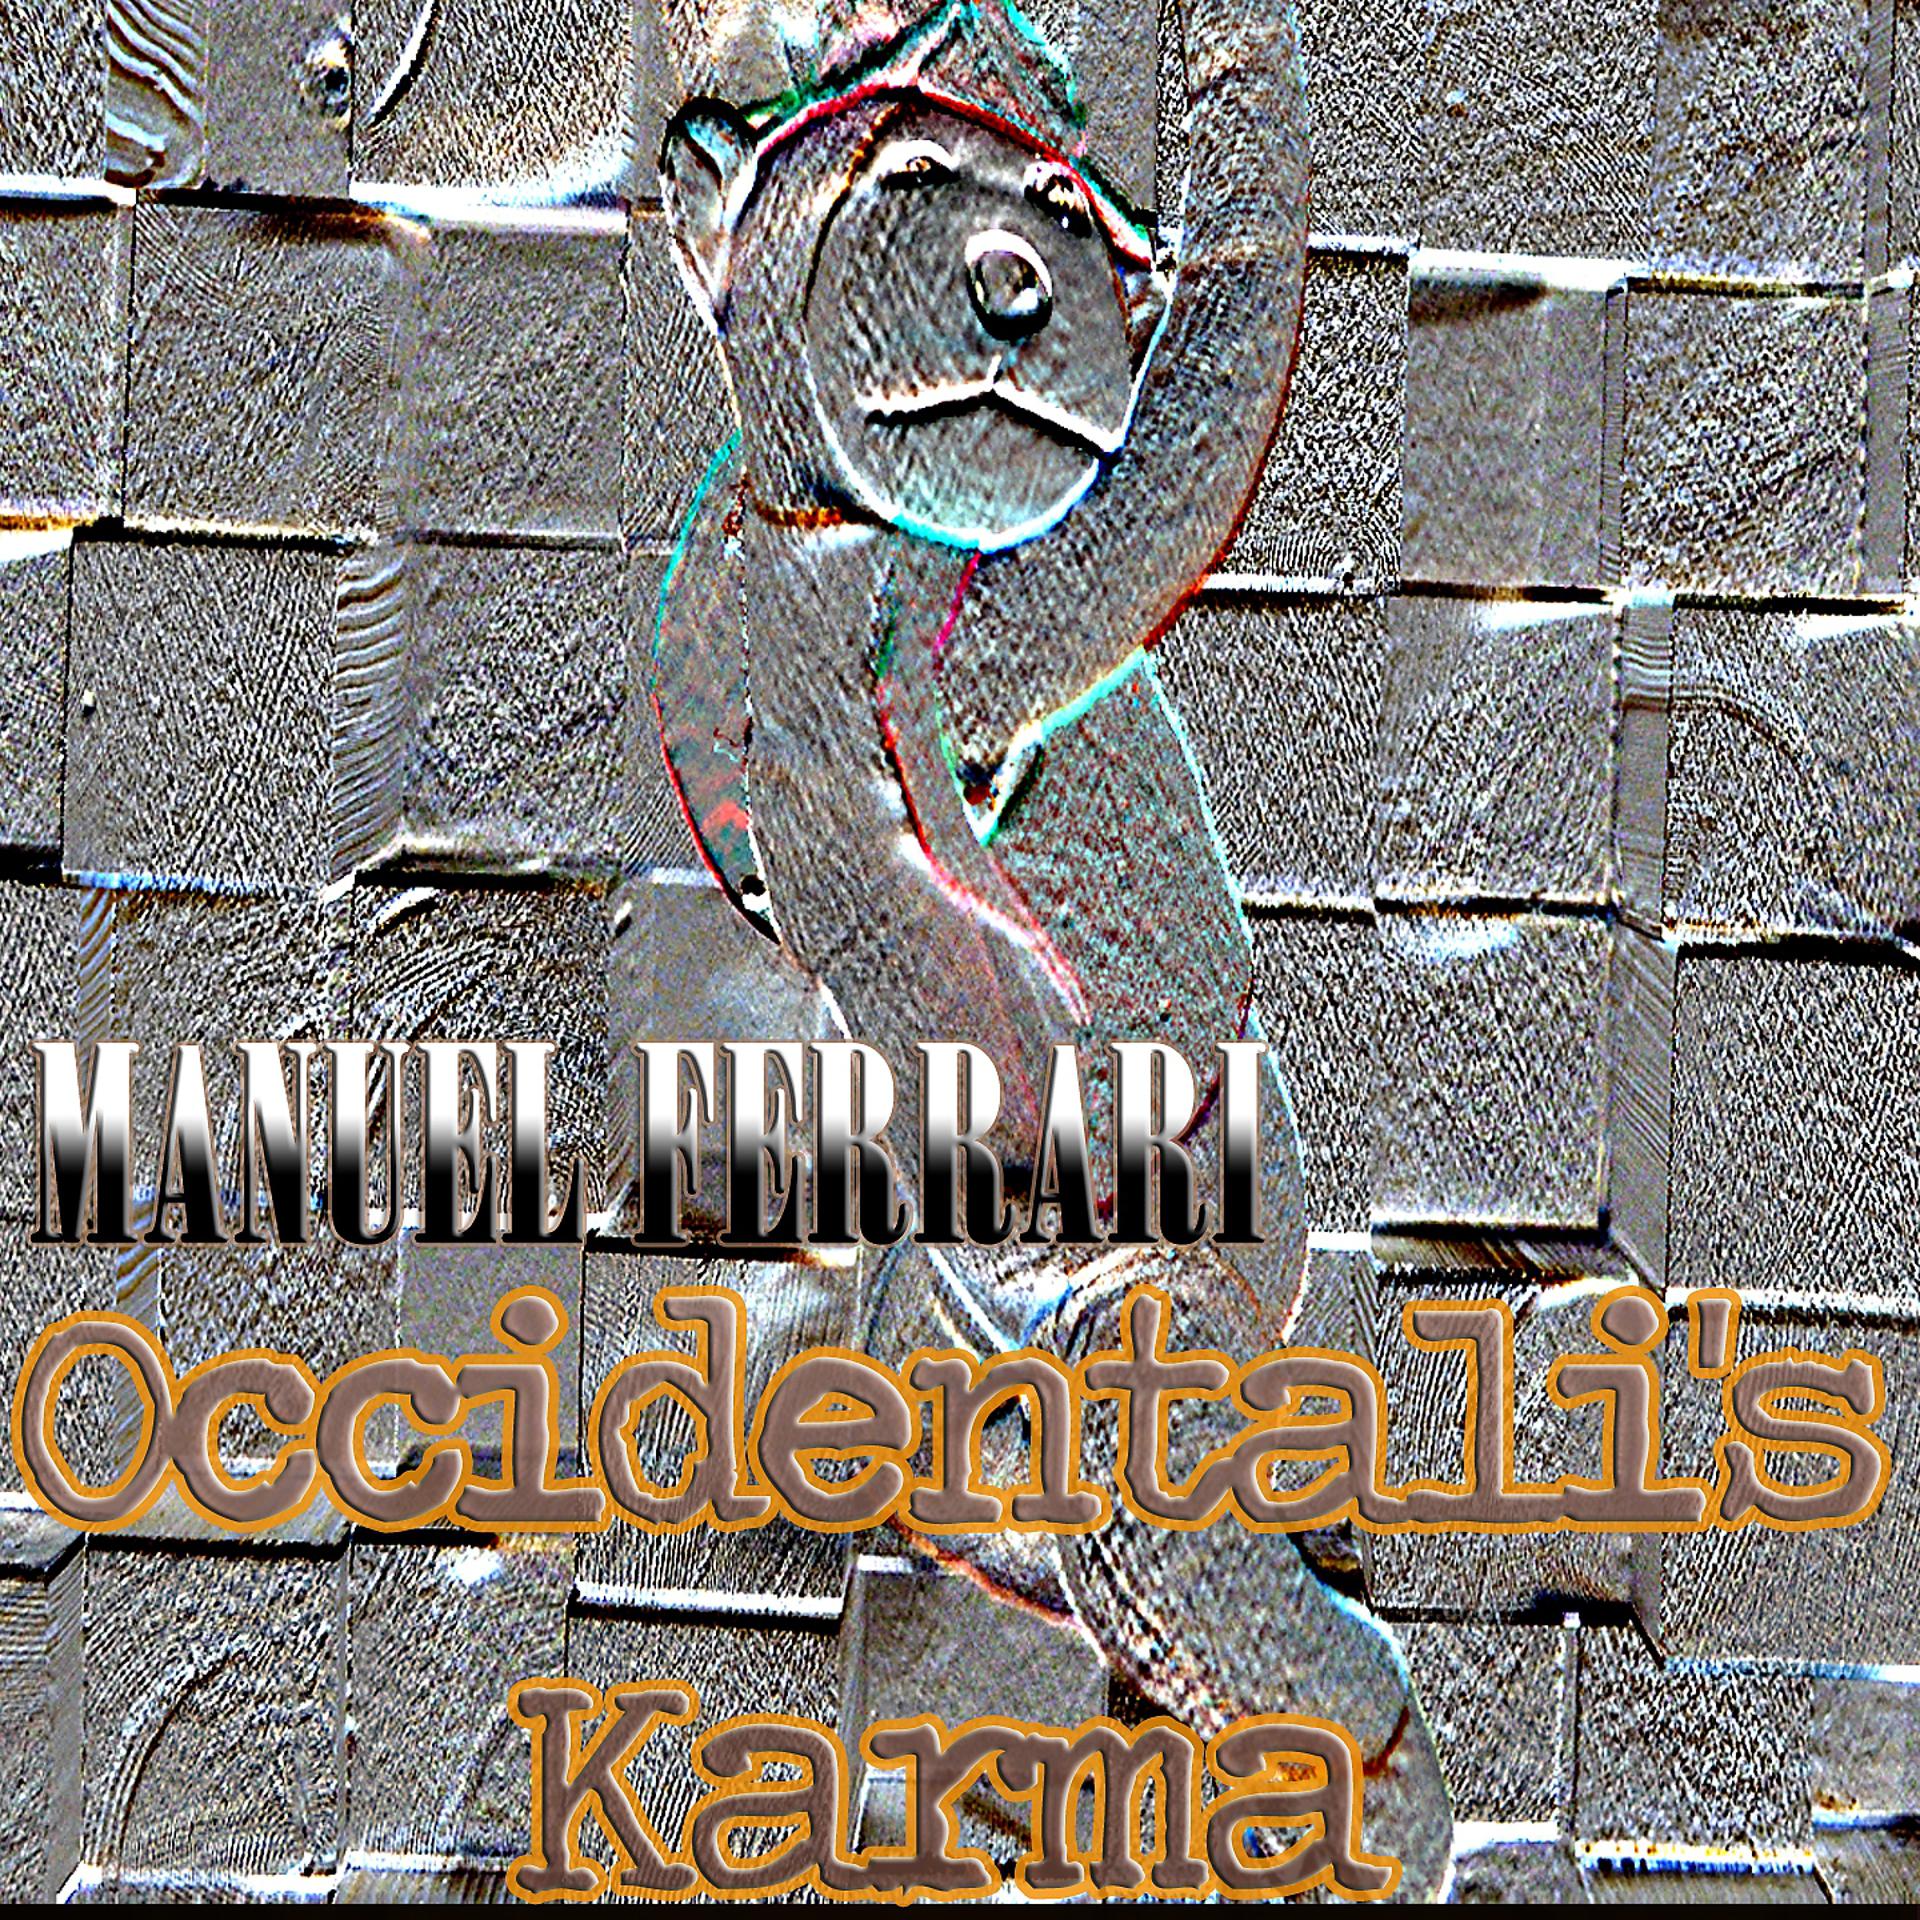 Постер альбома Occidentali's karma